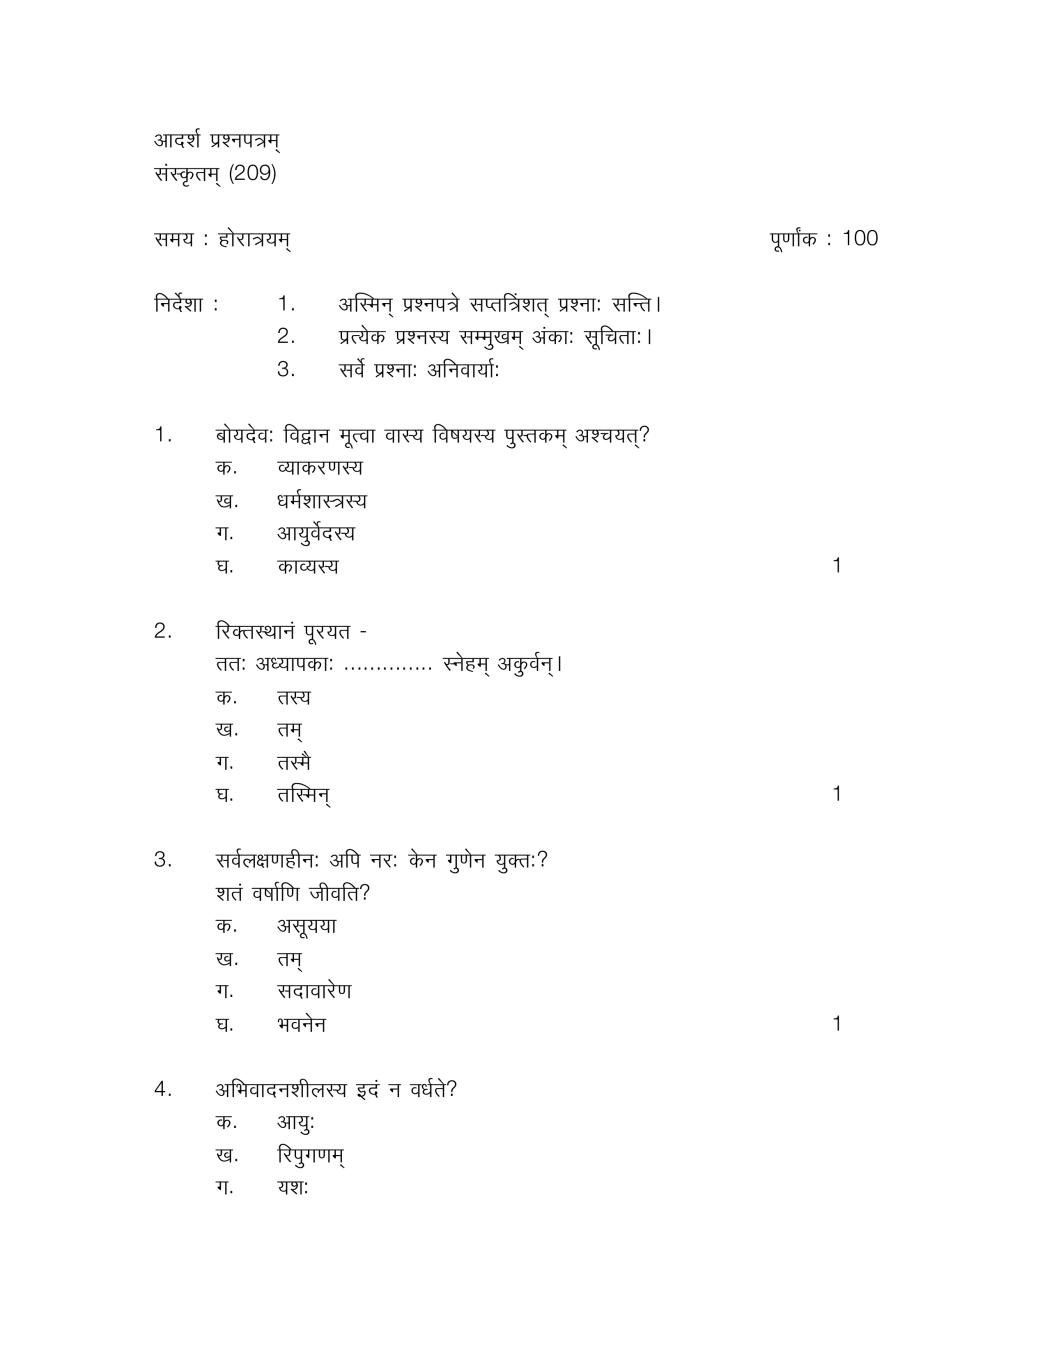 NIOS Class 10 Sample Paper 2020 - Sanskrit - Page 1